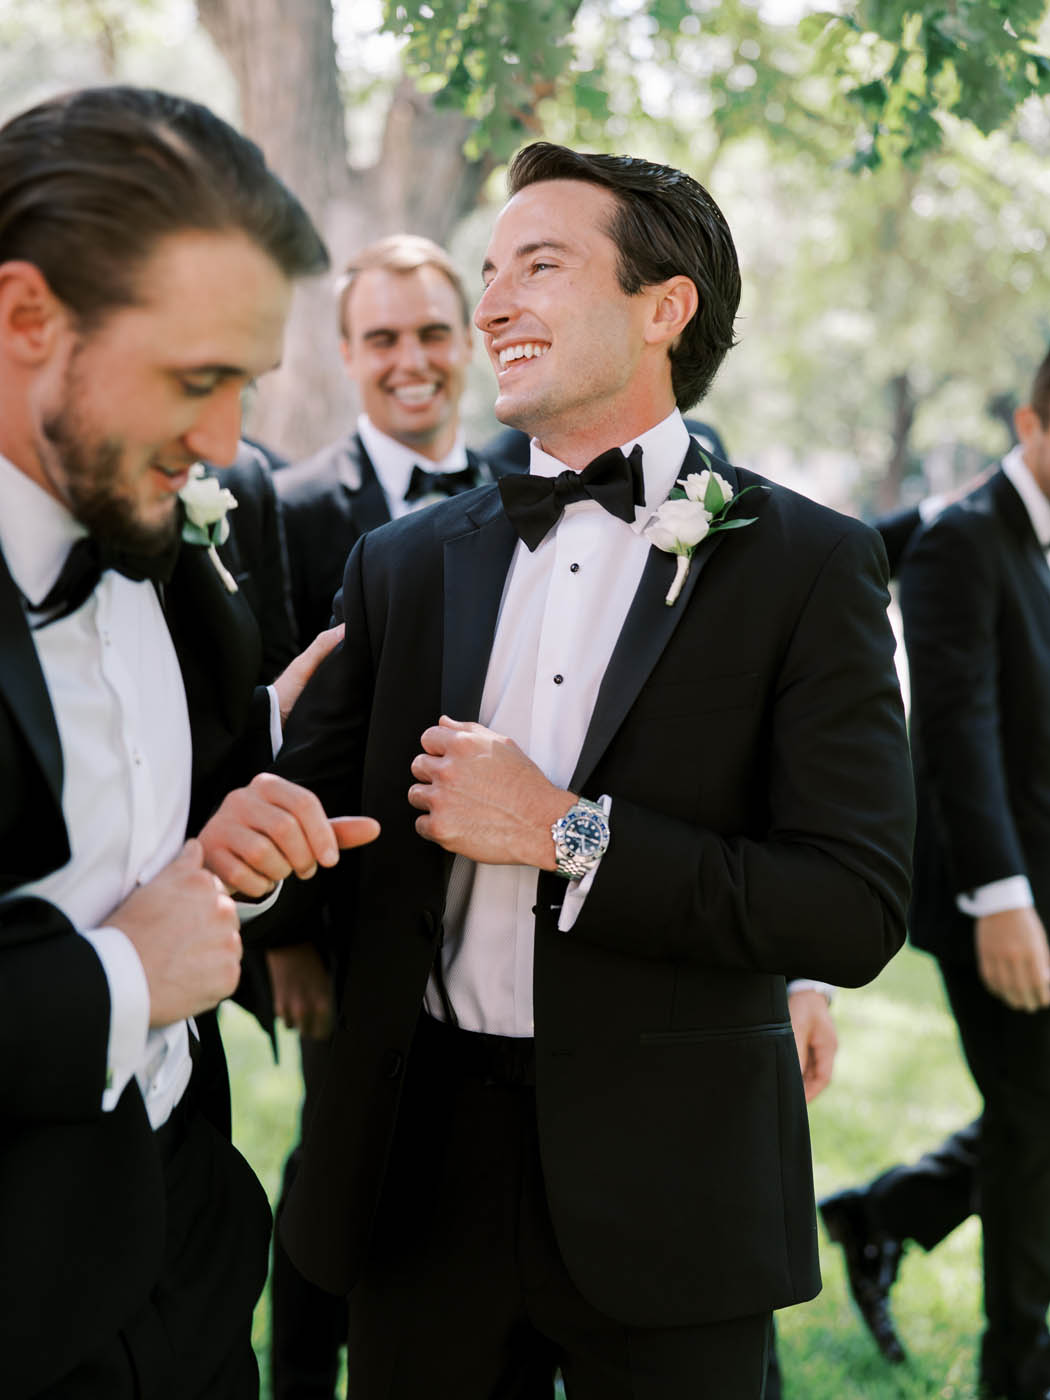 Ryan laughs with his groomsmen